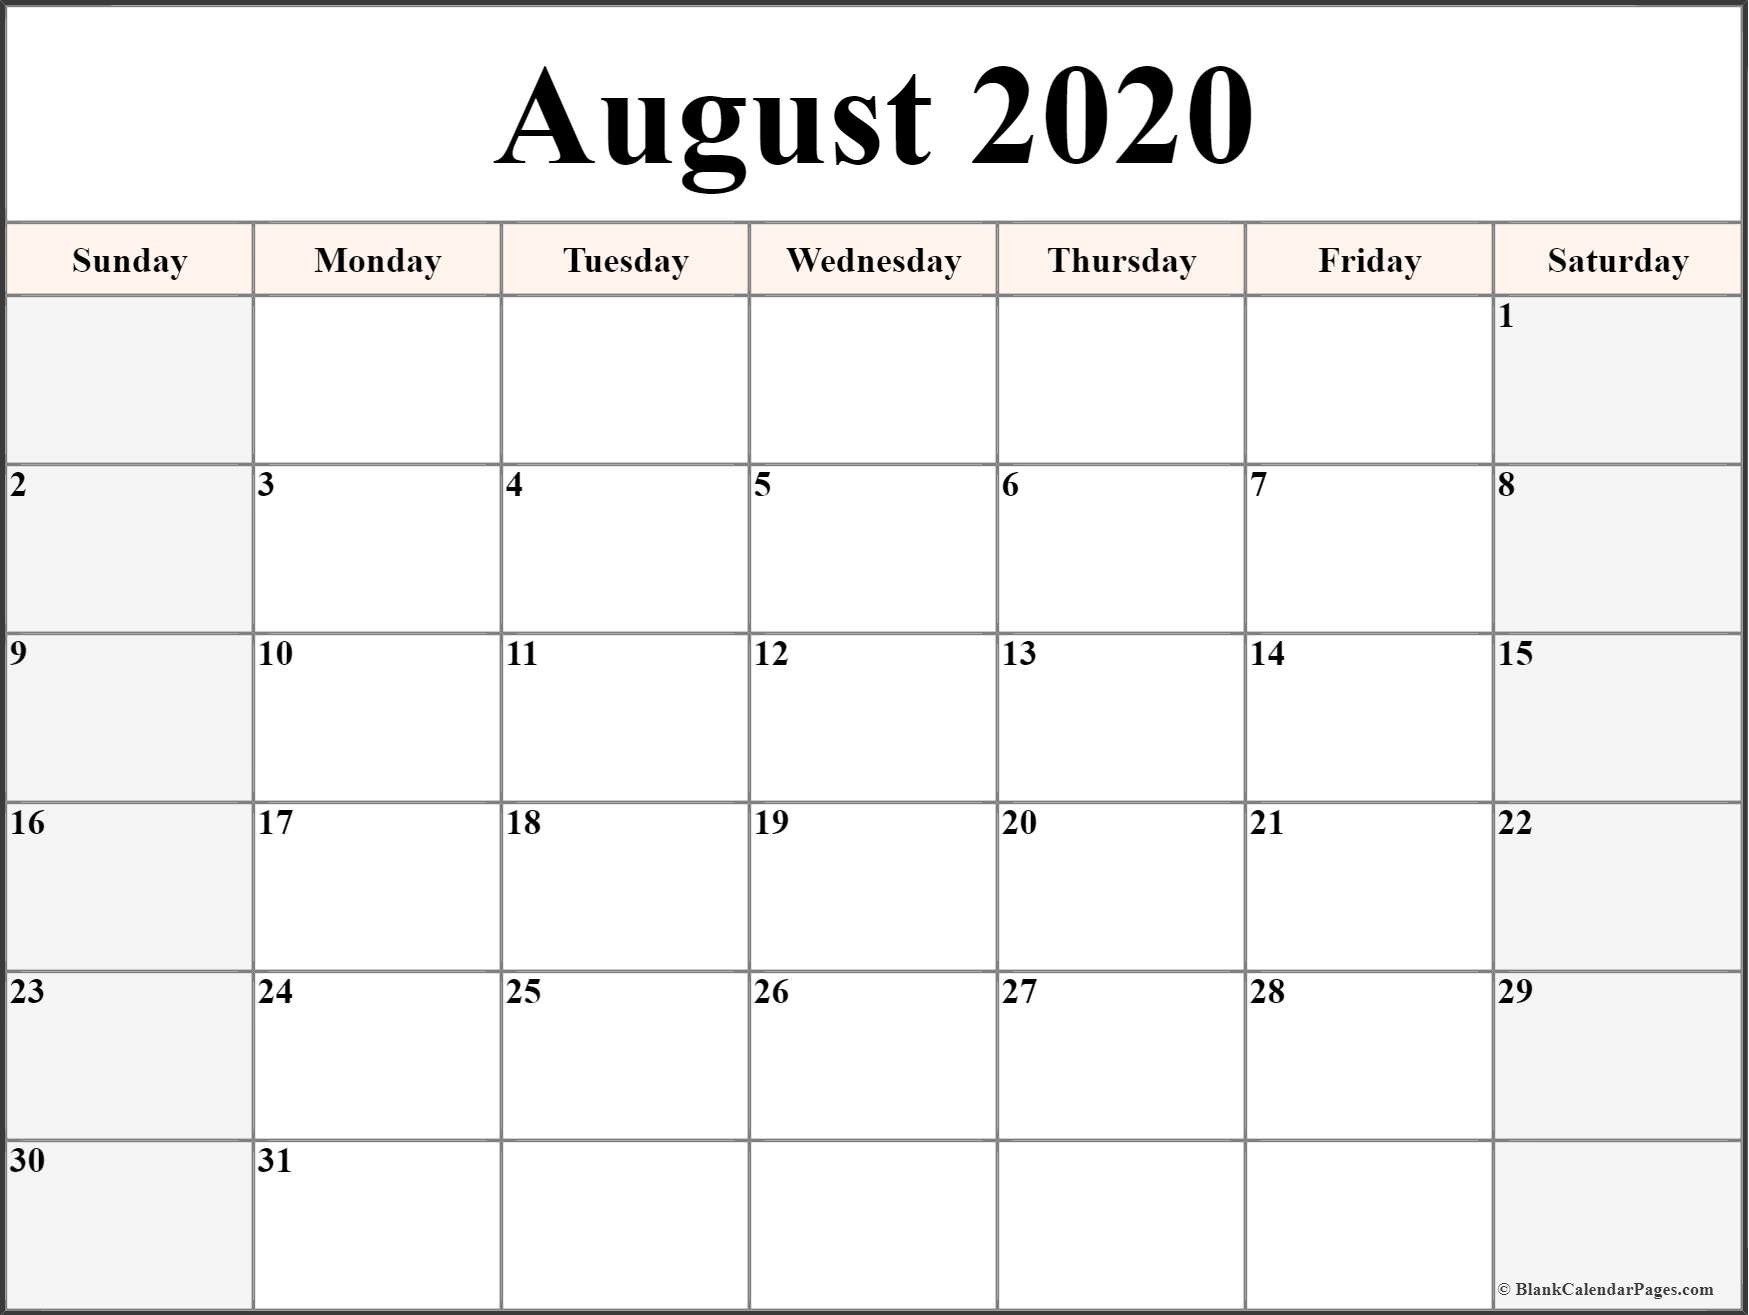 August 2020 Calendar | Free Printable Monthly Calendars-Calendar Template Fill In Aug 2020